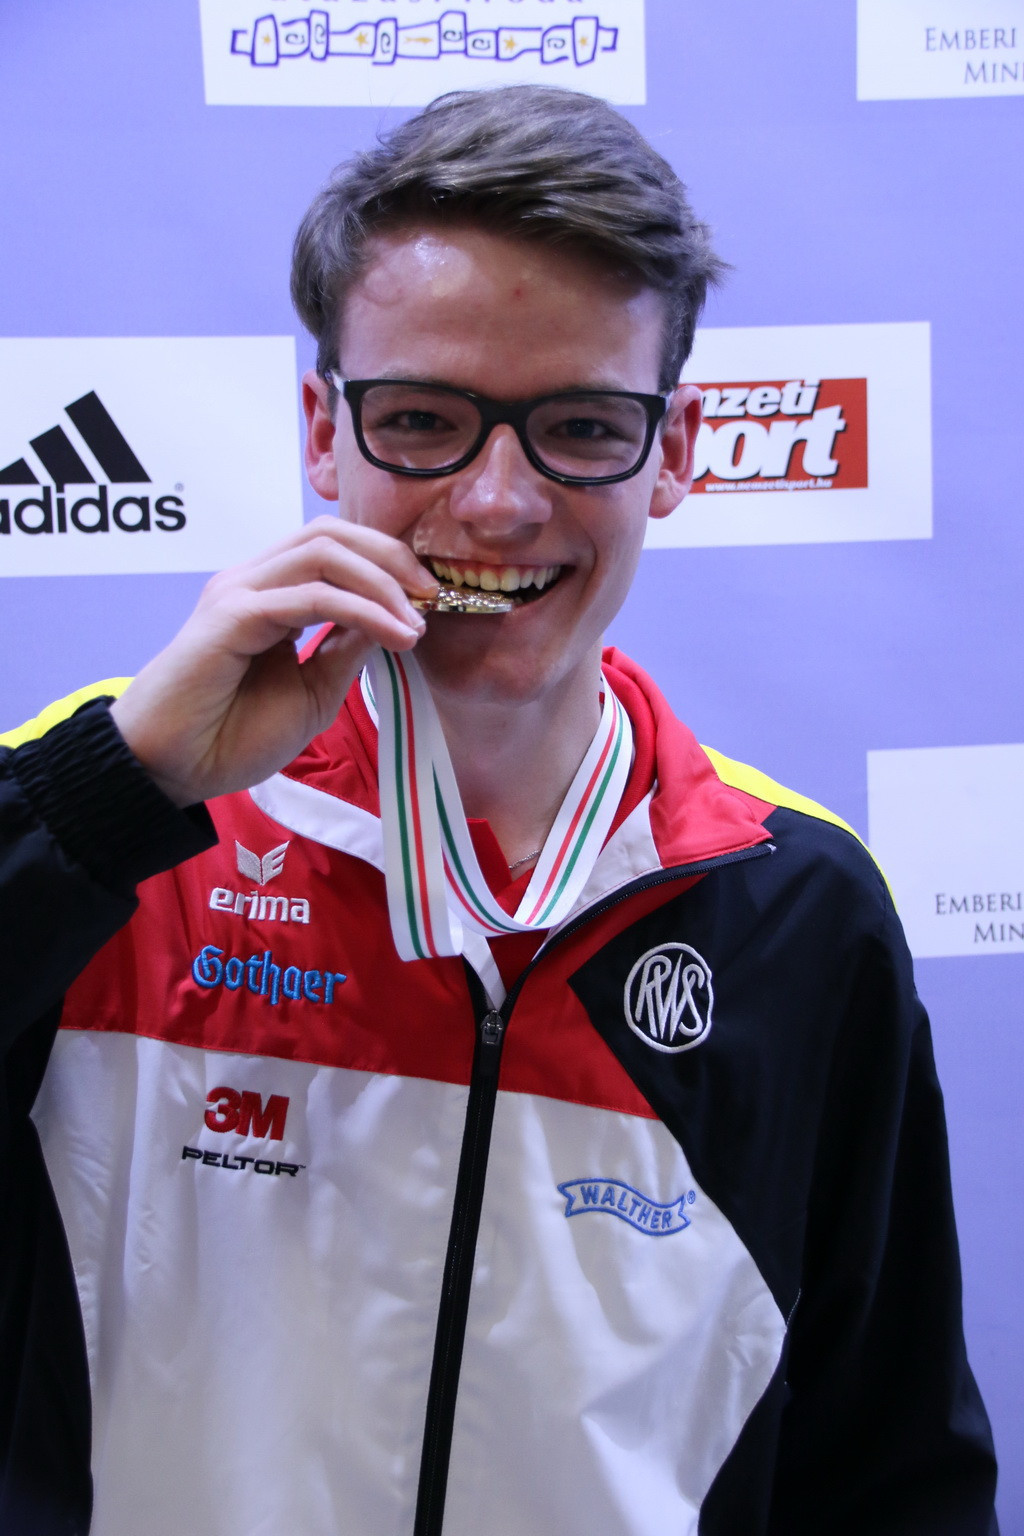 Germany's Maximilian Ulbrich won gold in today's men's junior event in Györ ©ESC